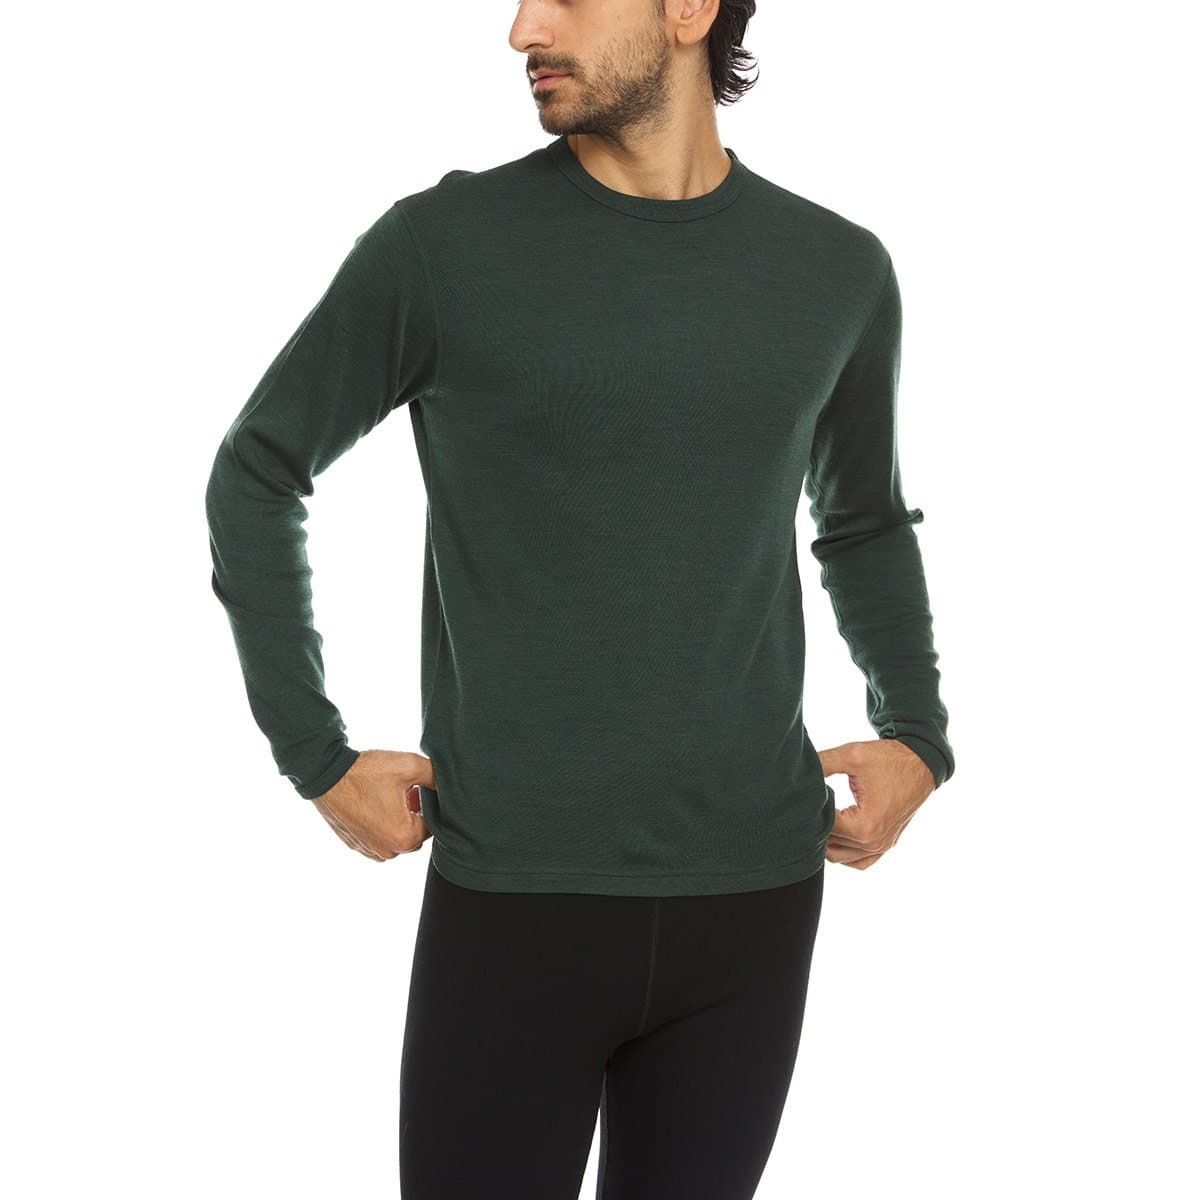 Peso medio: camiseta Chocorua para hombre, 100% lana merina